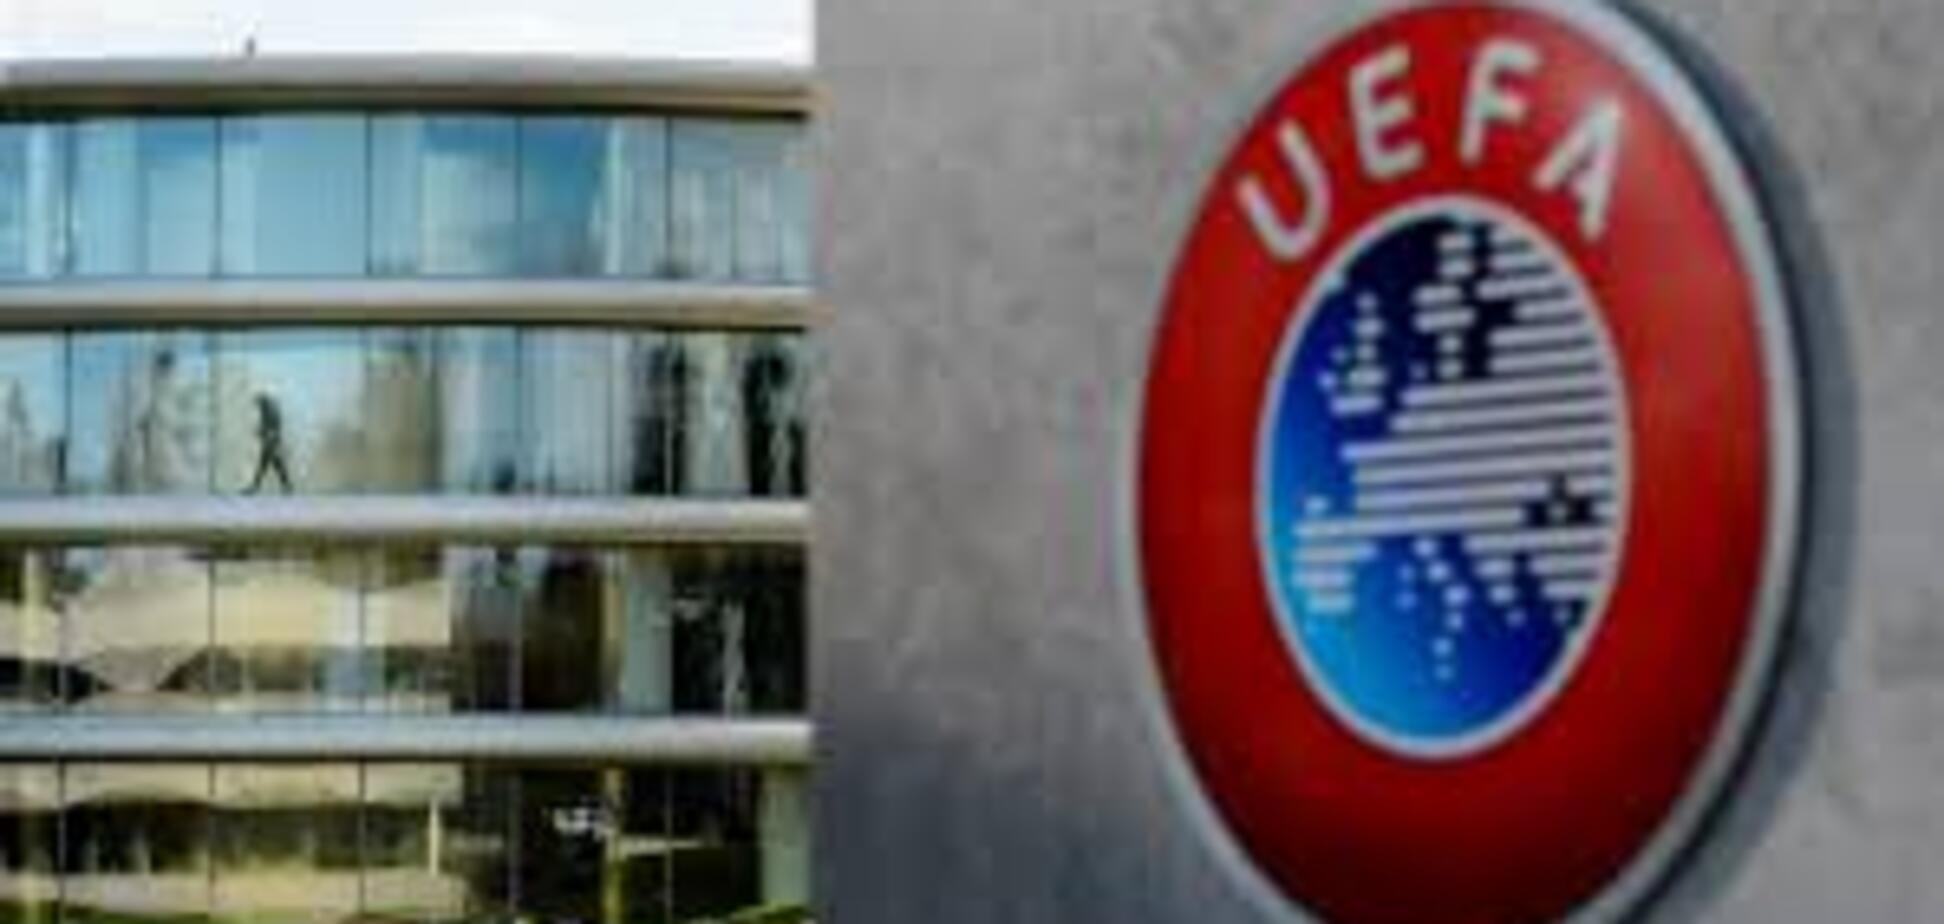 Затянуть до осени: УЕФА предложил три варианта завершения сезона